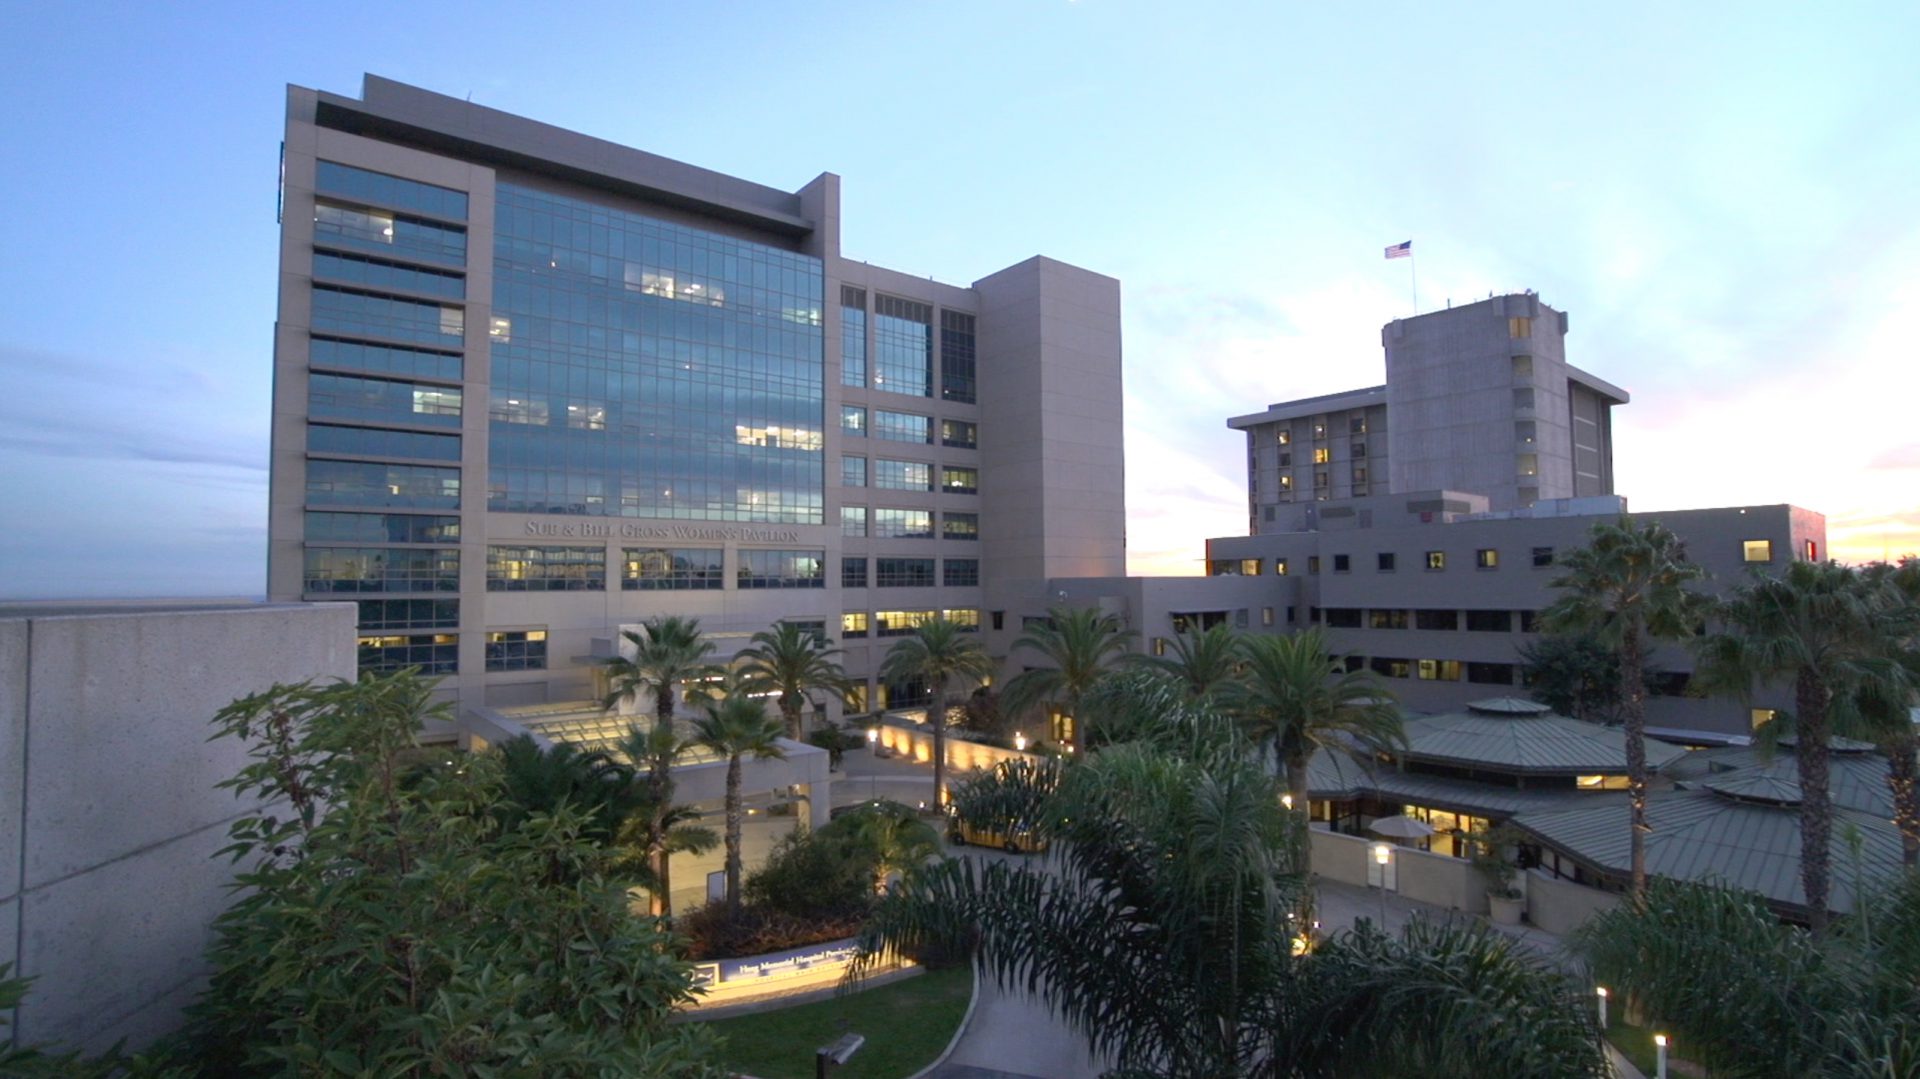 Hoag Named One of '100 Great Hospitals' - Newport Beach News